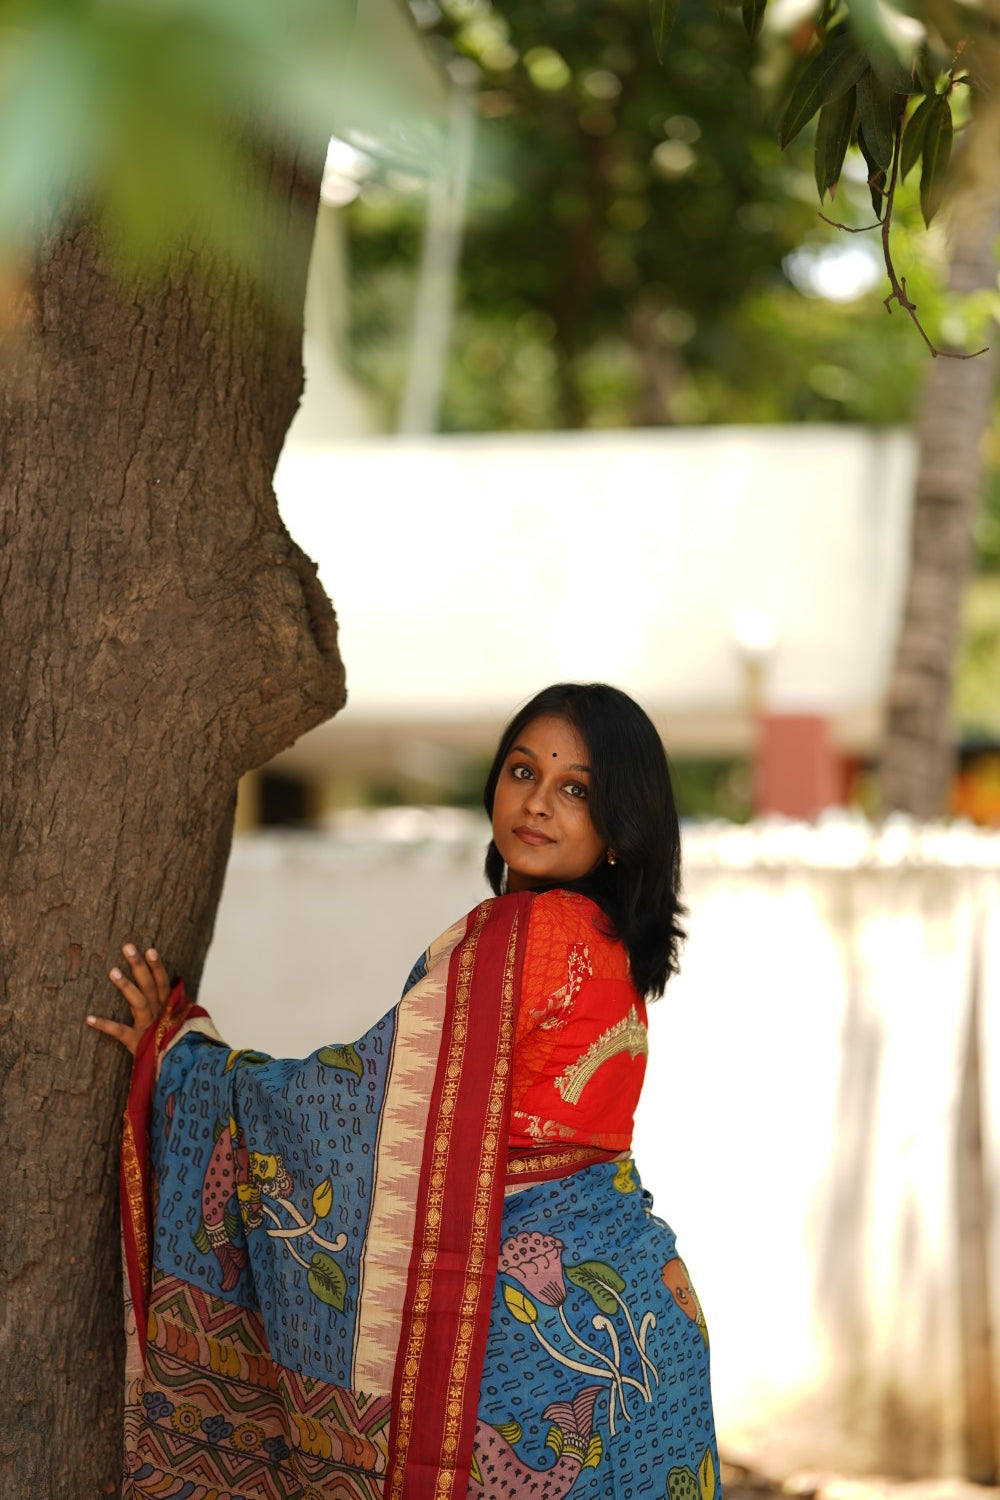 Kalamkari Hand Painted in Handloom Cotton Saree With Silk Border-Mermaid tale PC10152